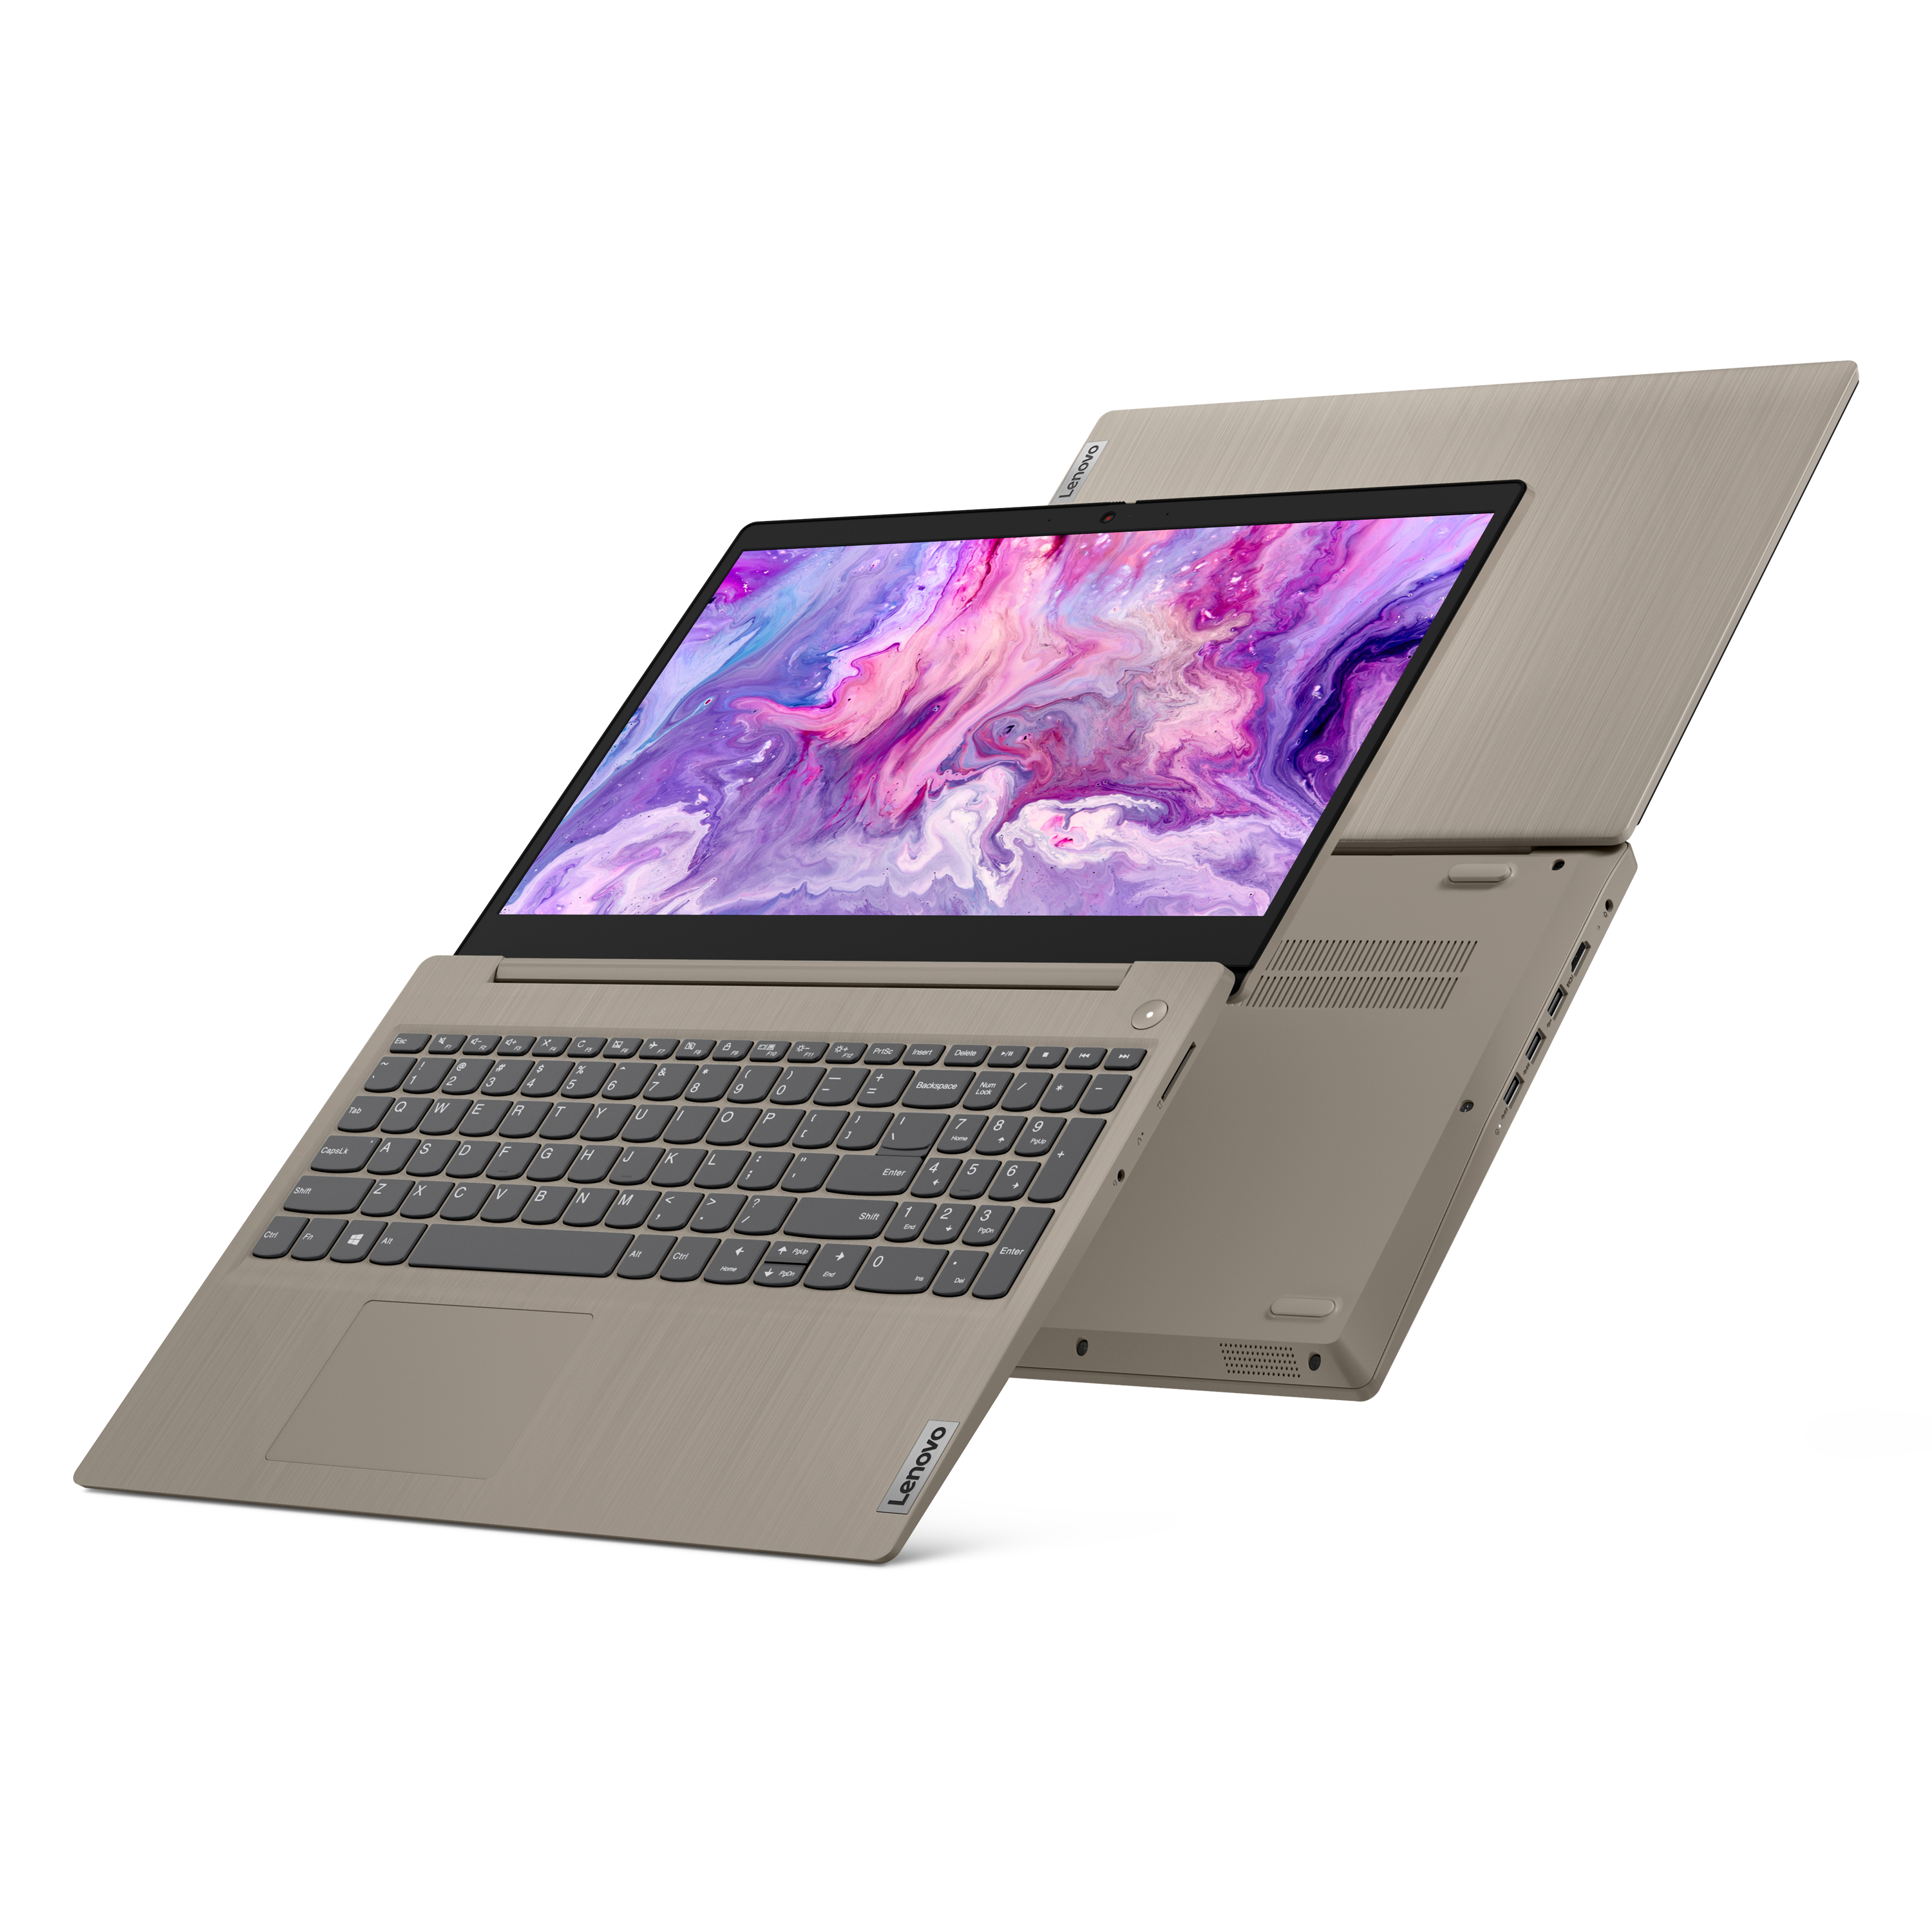 Lenovo IdeaPad 3 15" Laptop, Intel Core i5-1035G1 Quad-Core Processor, 8GB Memory, 256GB Solid State Drive, Windows 10, Almond, 81WE00EPUS (Google Classroom Compatible) - image 14 of 16